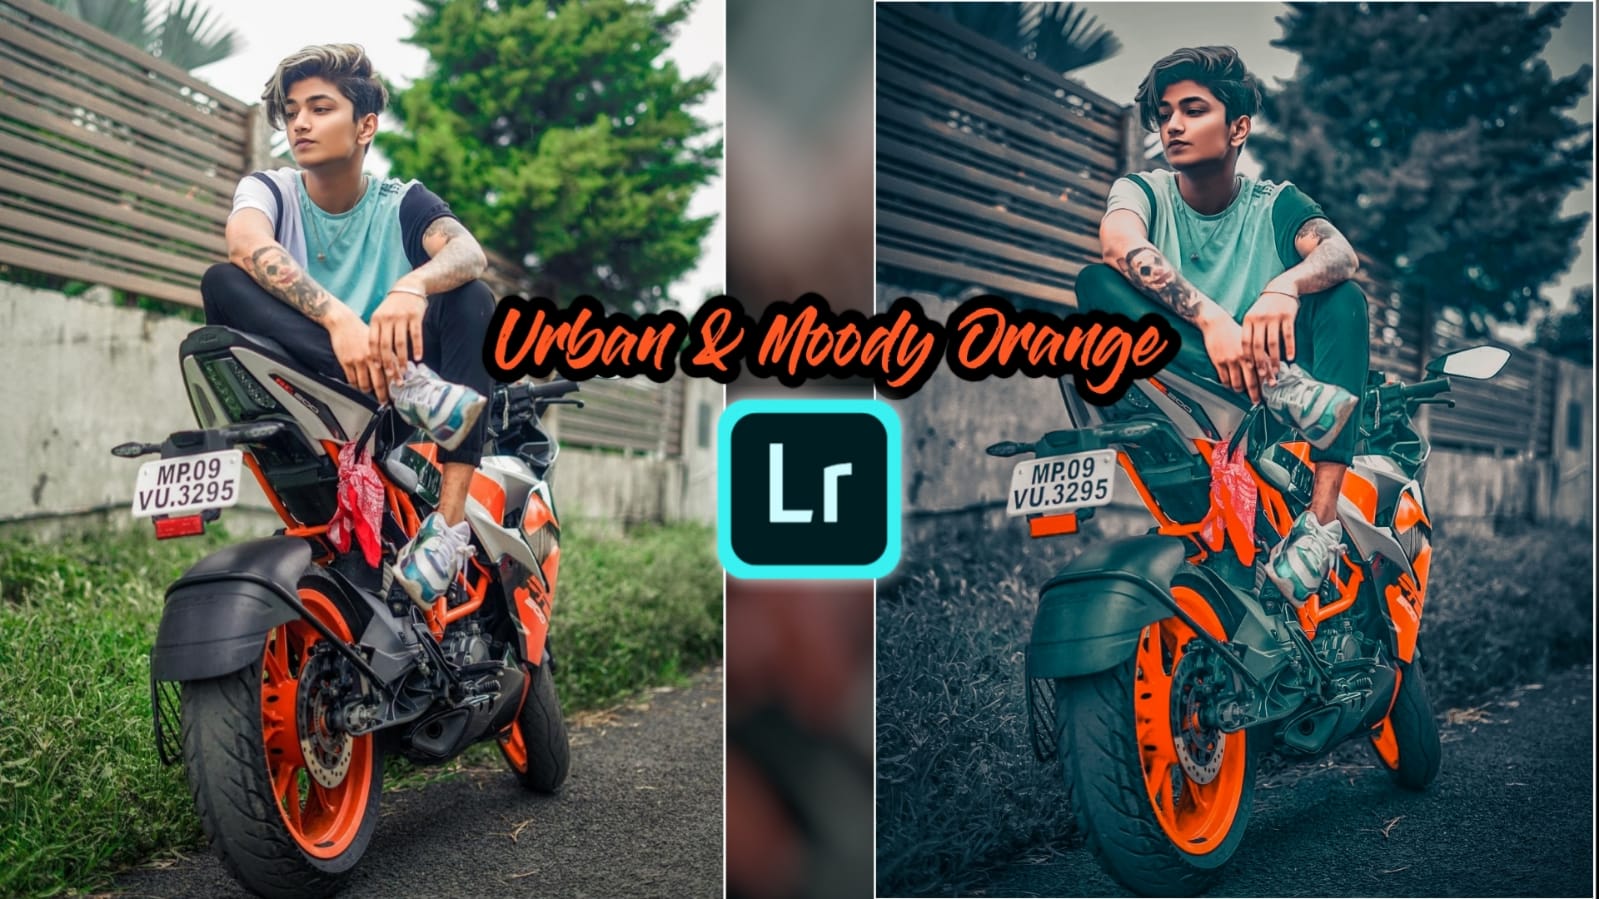 lightroom mobile urban and moody orange preset download